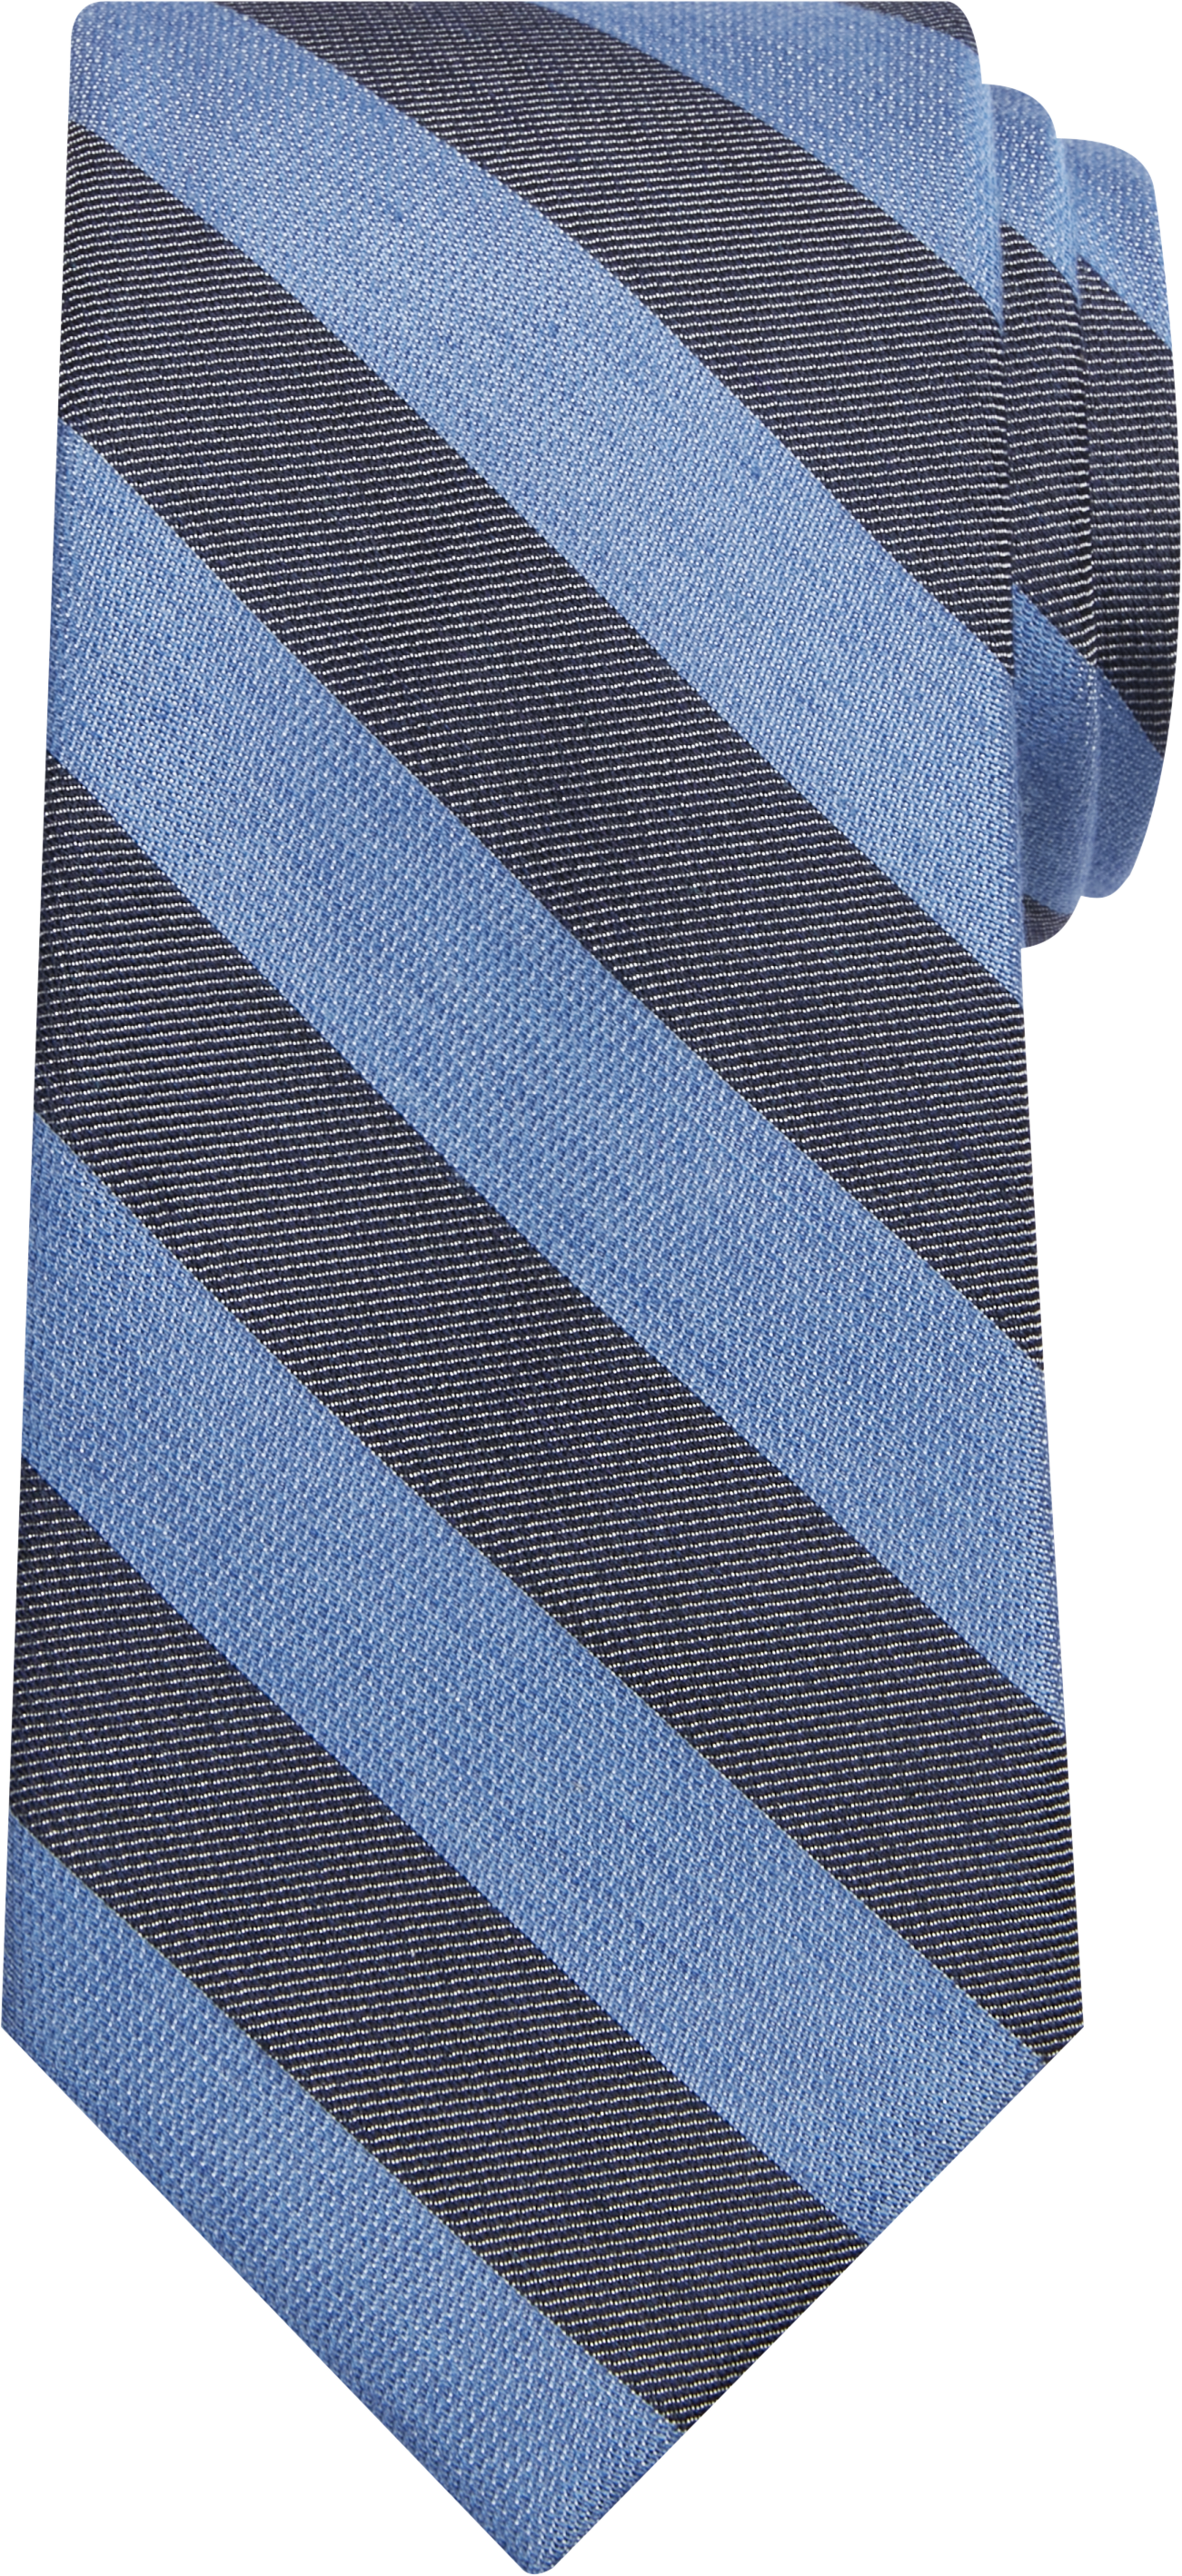 Indigo Stripe Tie